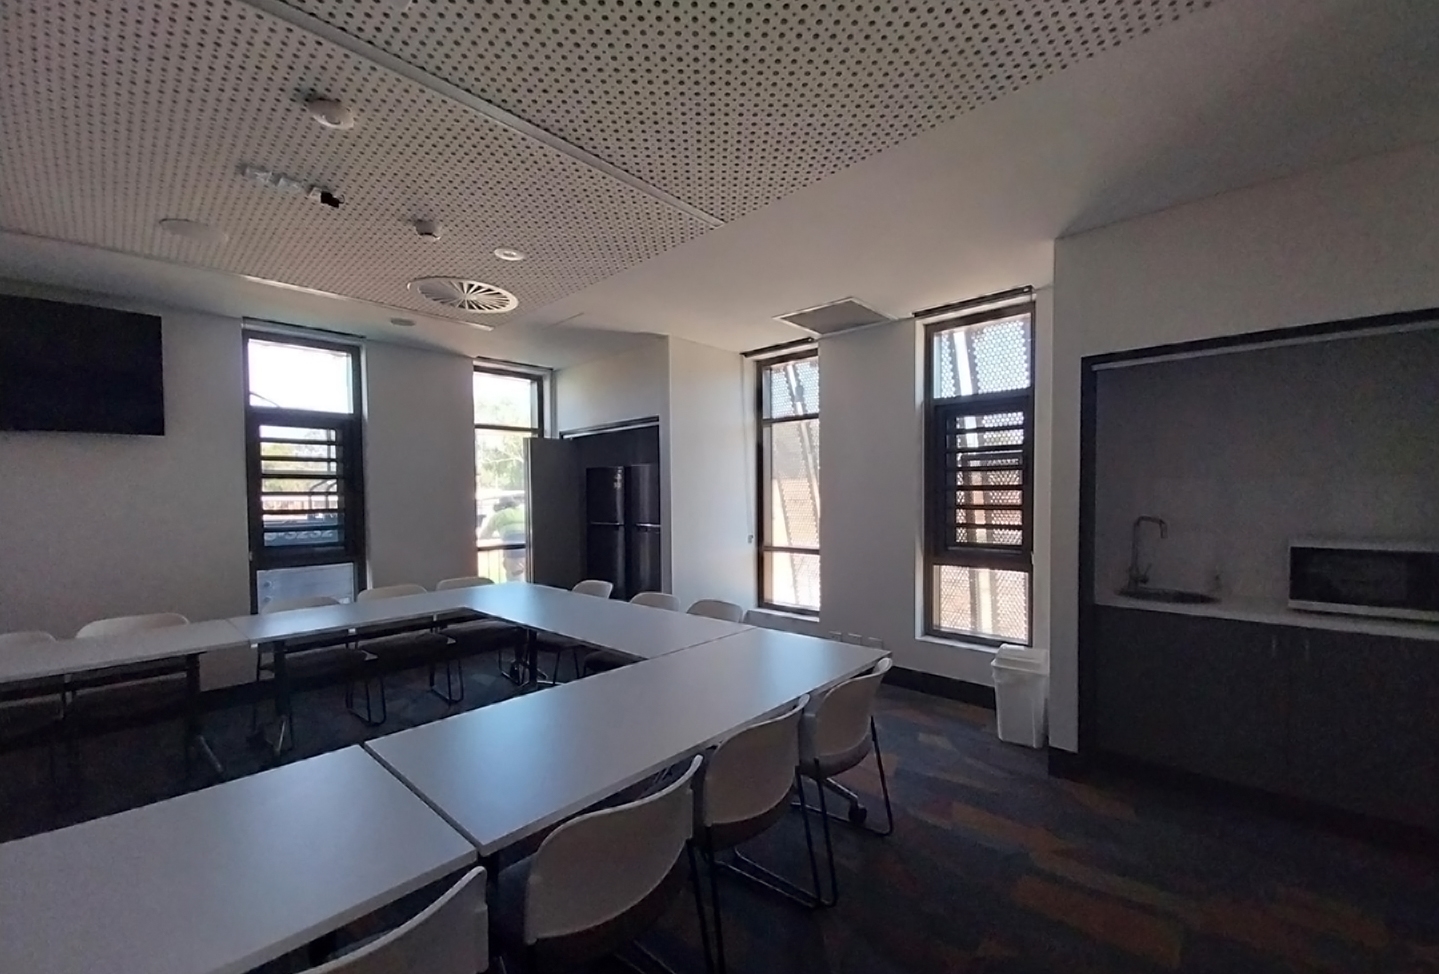 Meeting Room Image